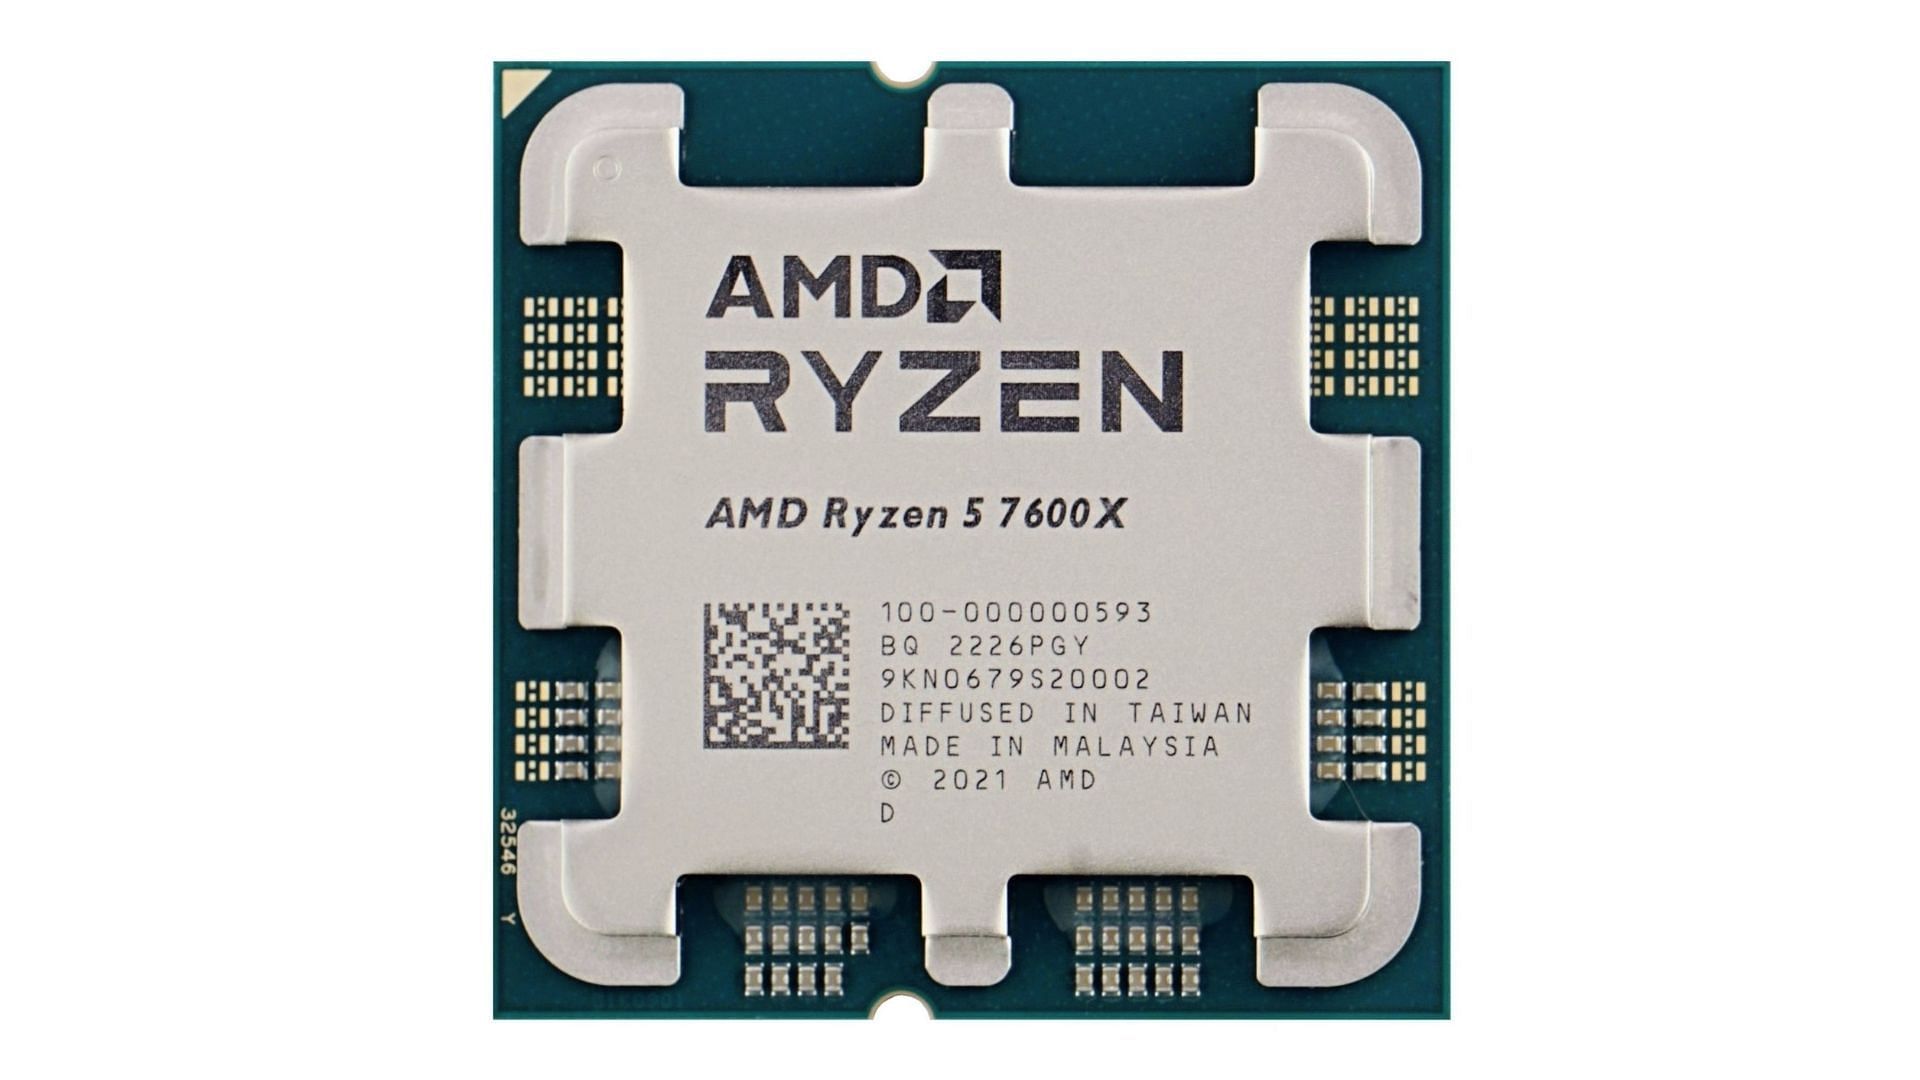 AMD Ryzen 5 7600X review: The new mid-range king?